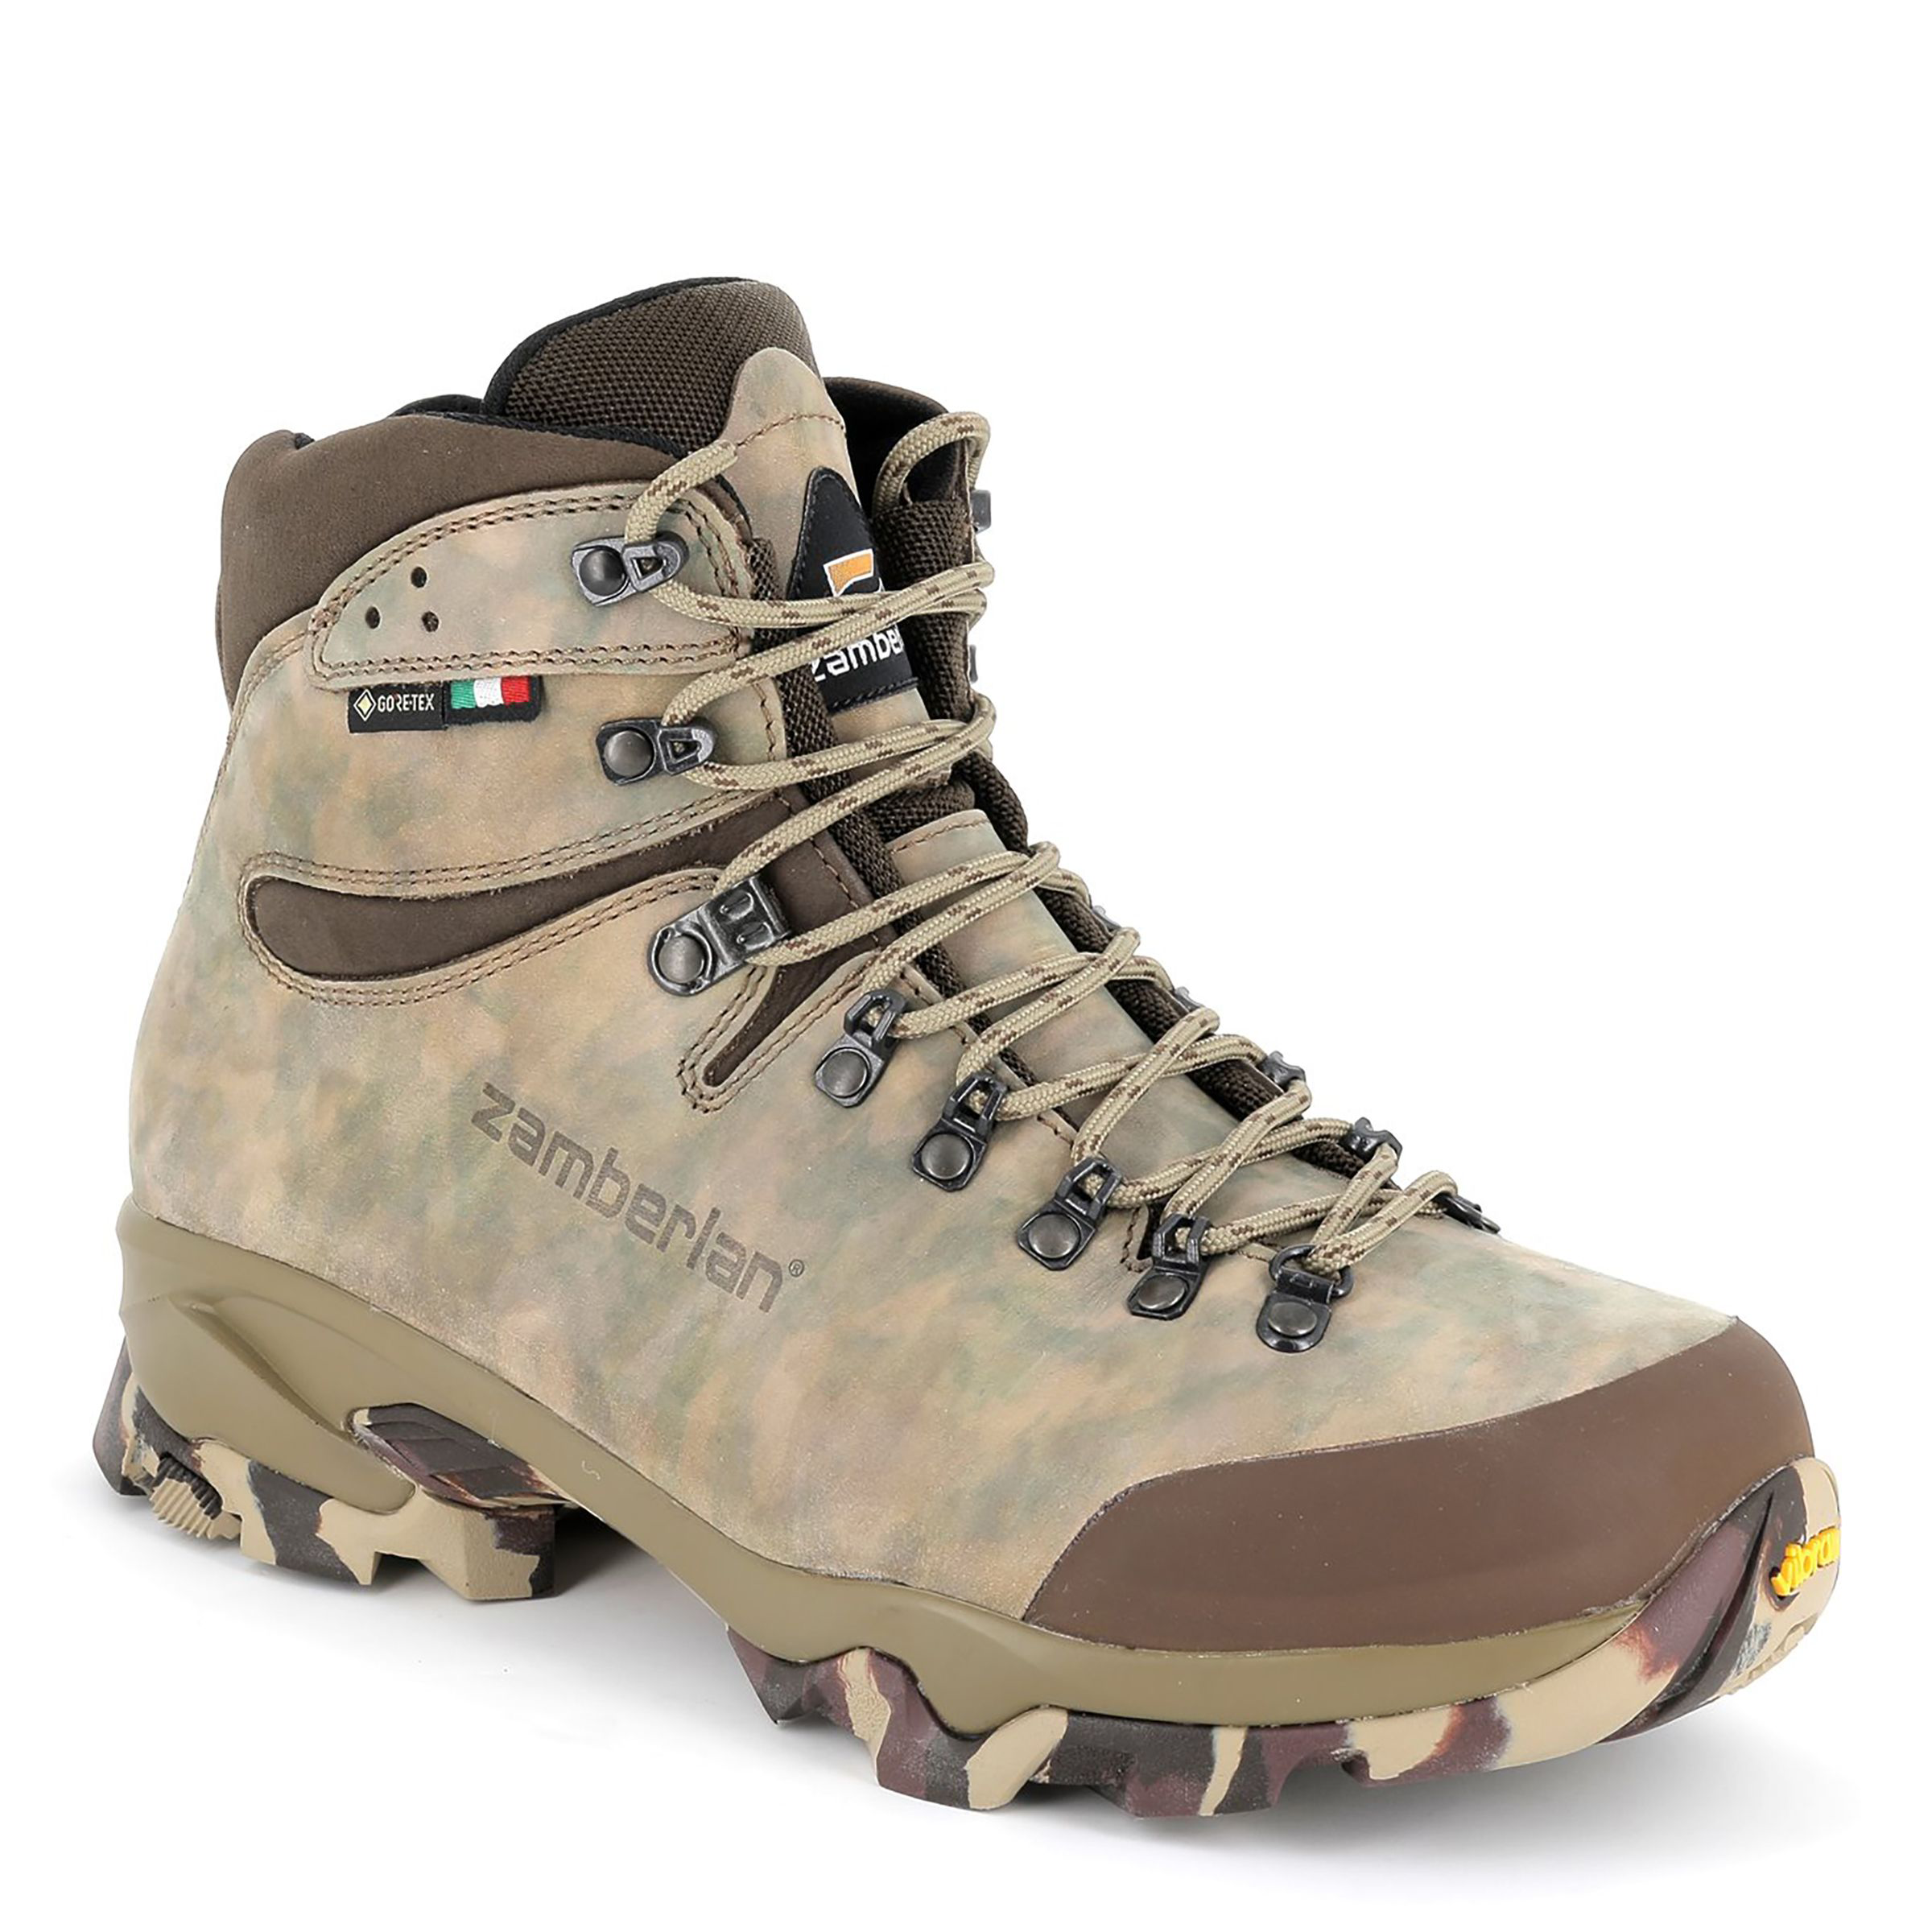 Zamberlan 1213 Leopard GTX RR GORE-TEX Hunting Boots for Men - Beige - 9W